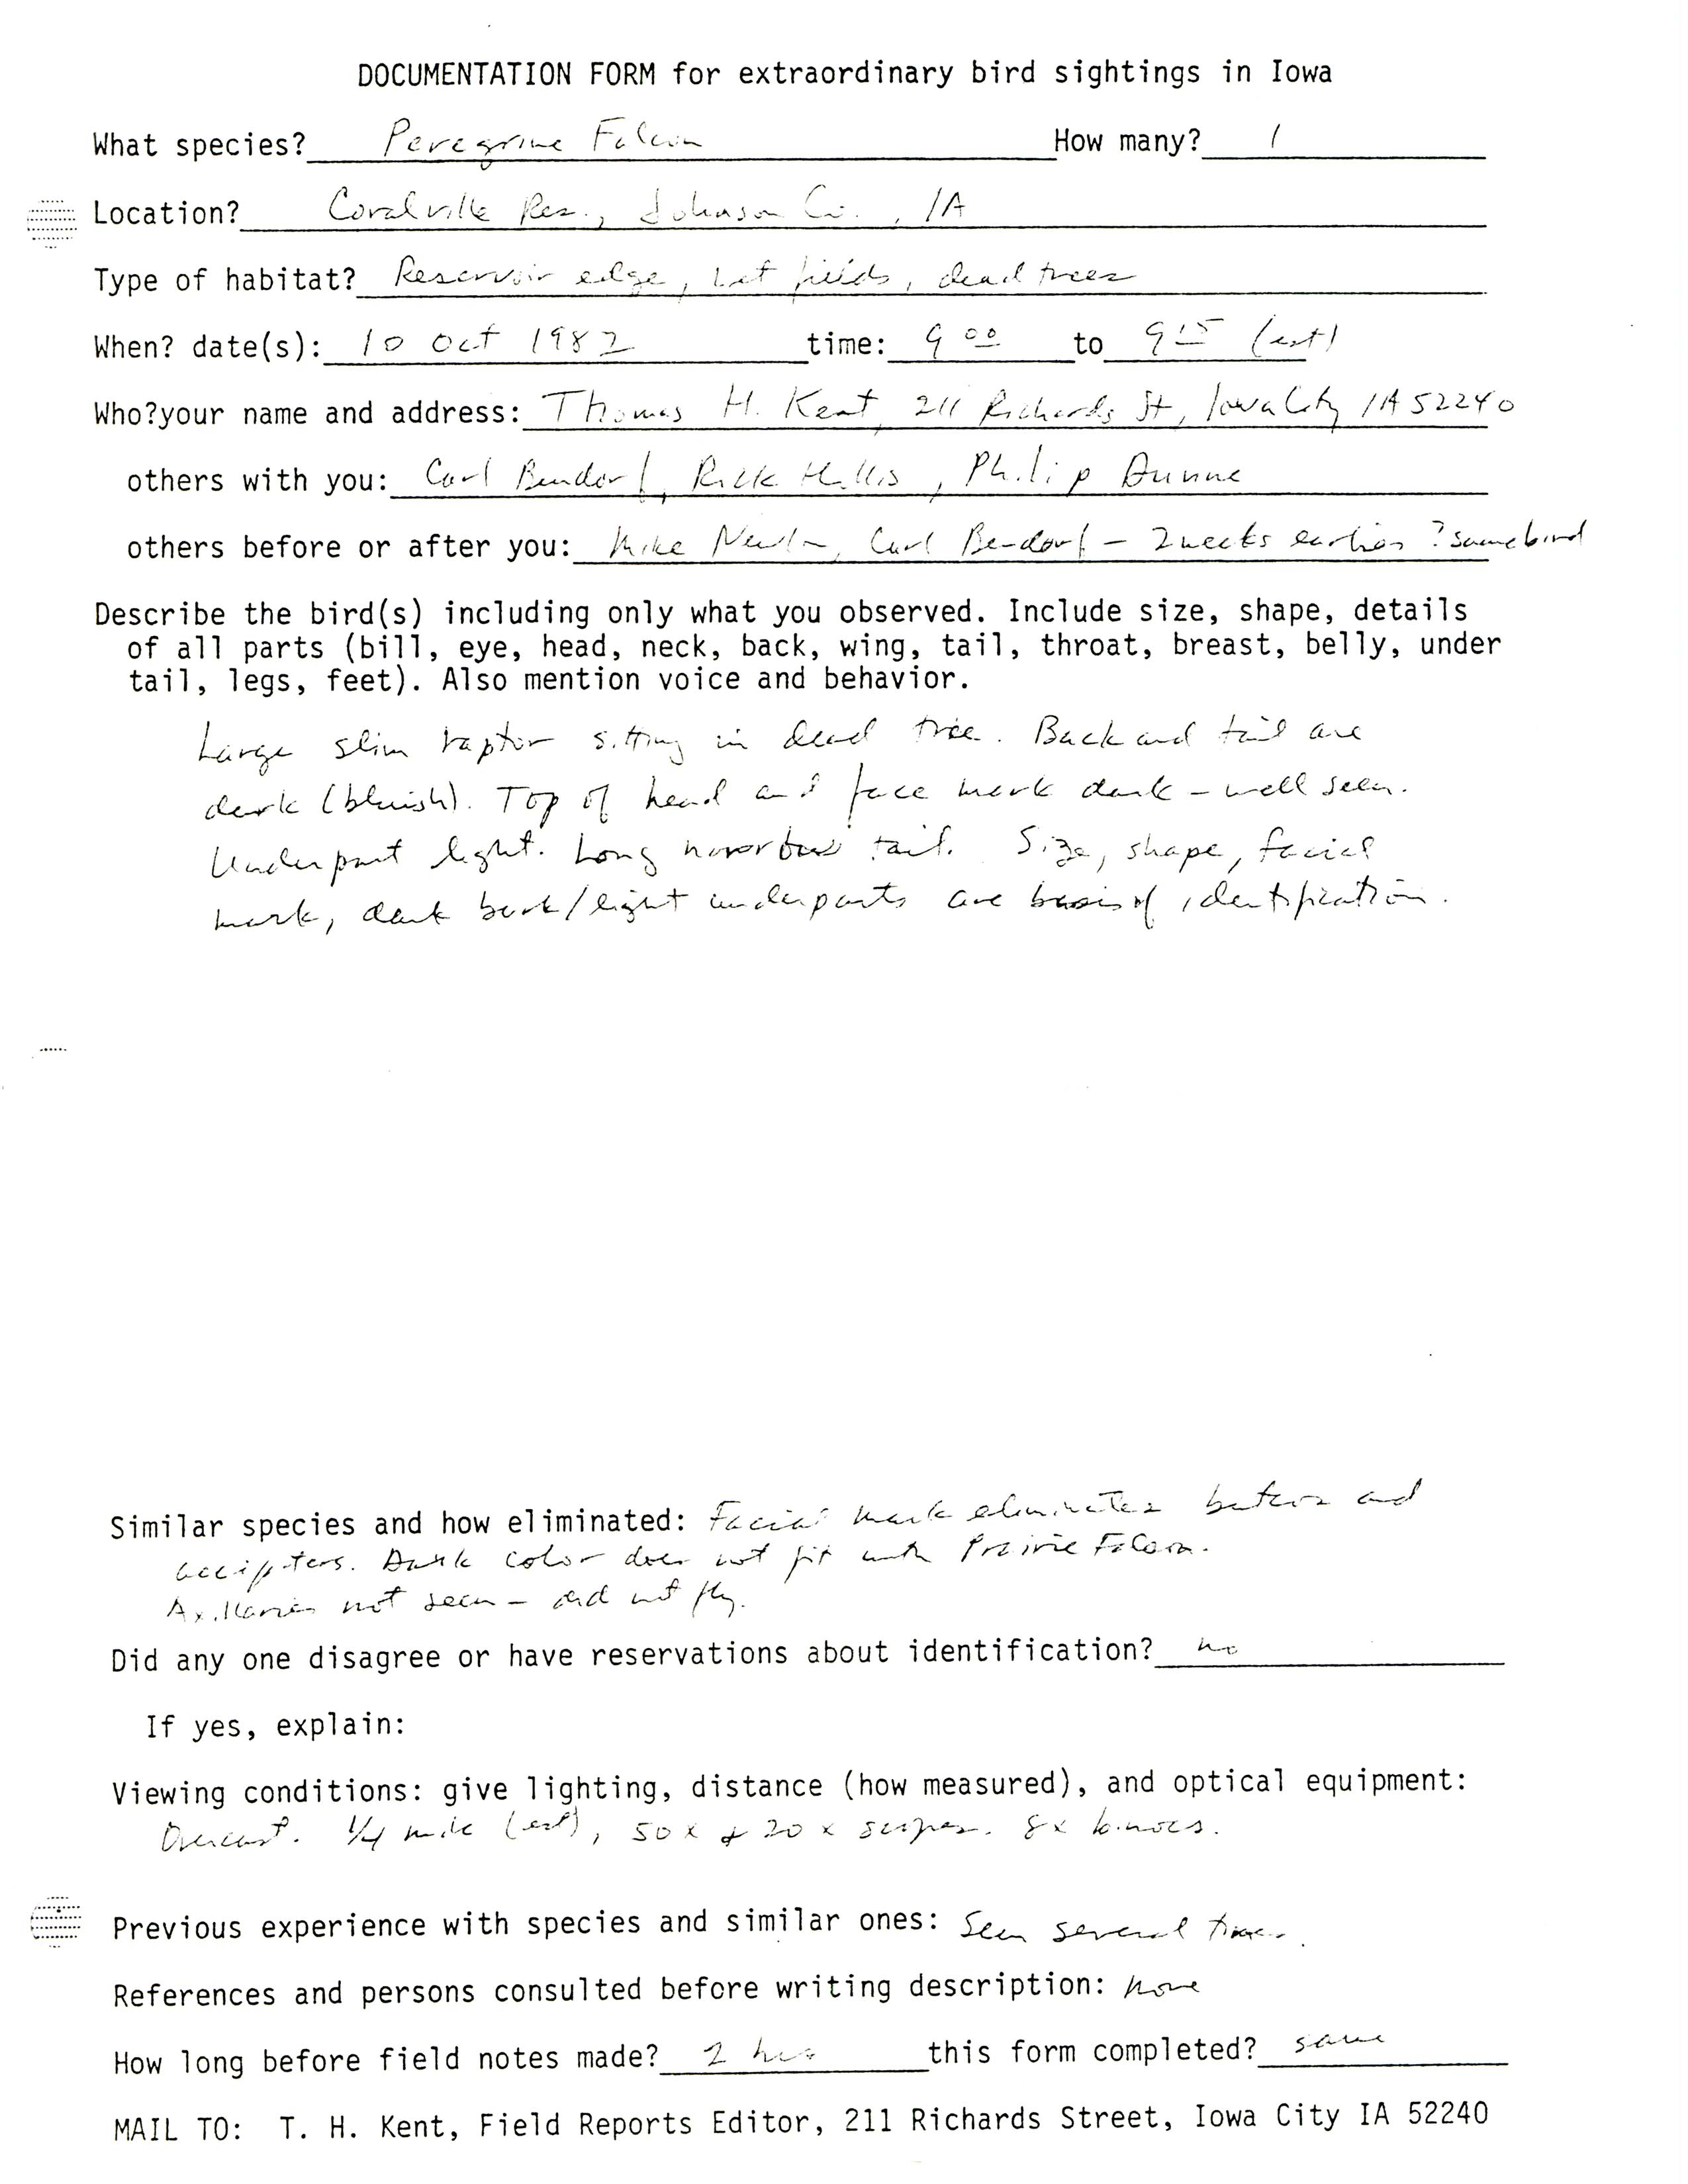 Rare bird documentation form for Peregrine Falcon at Coralville Reservoir, 1982